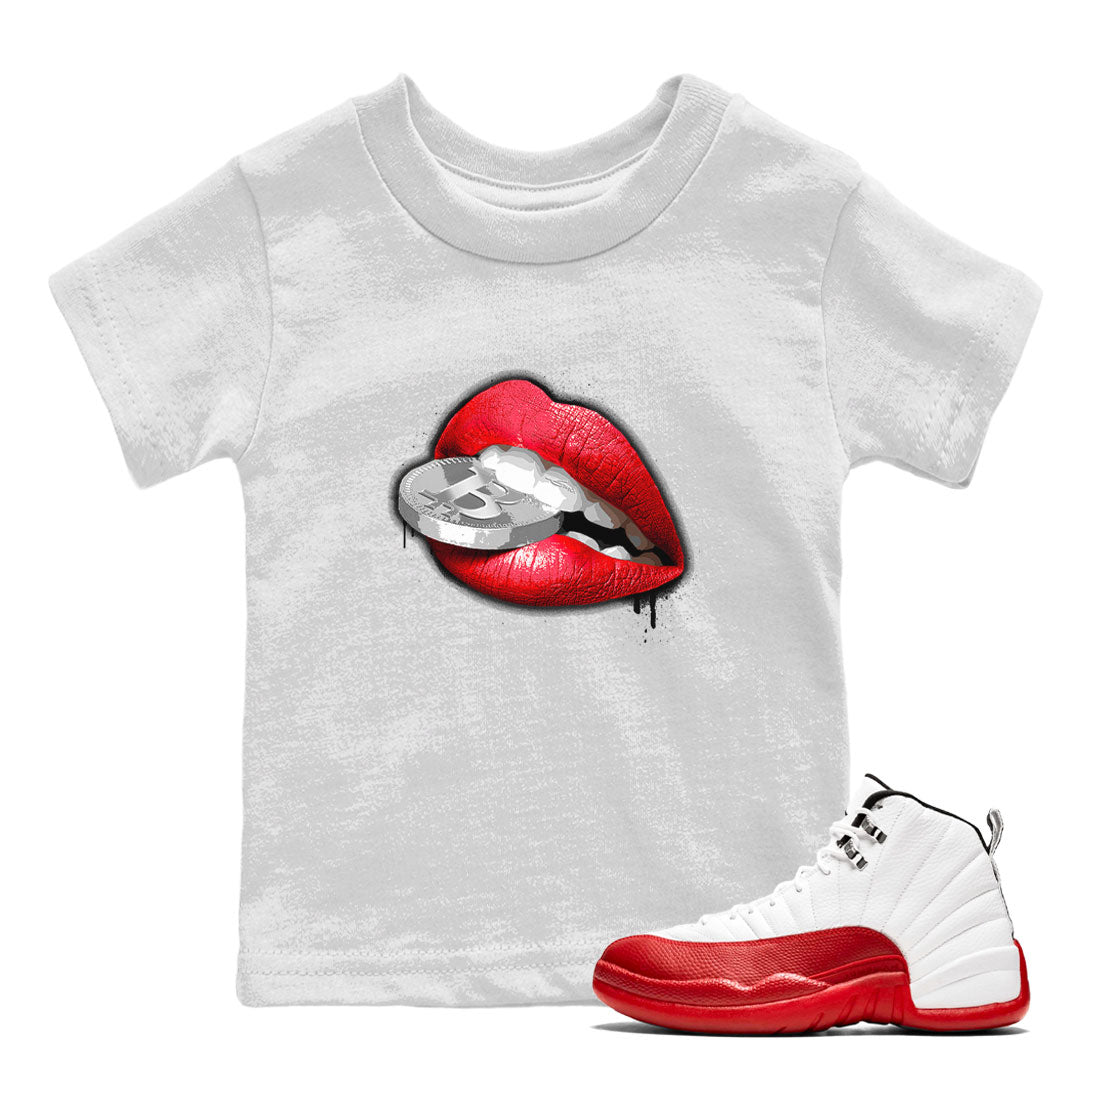 Jordan 12 Super Bowl, Dripping Lips Women's Shirts